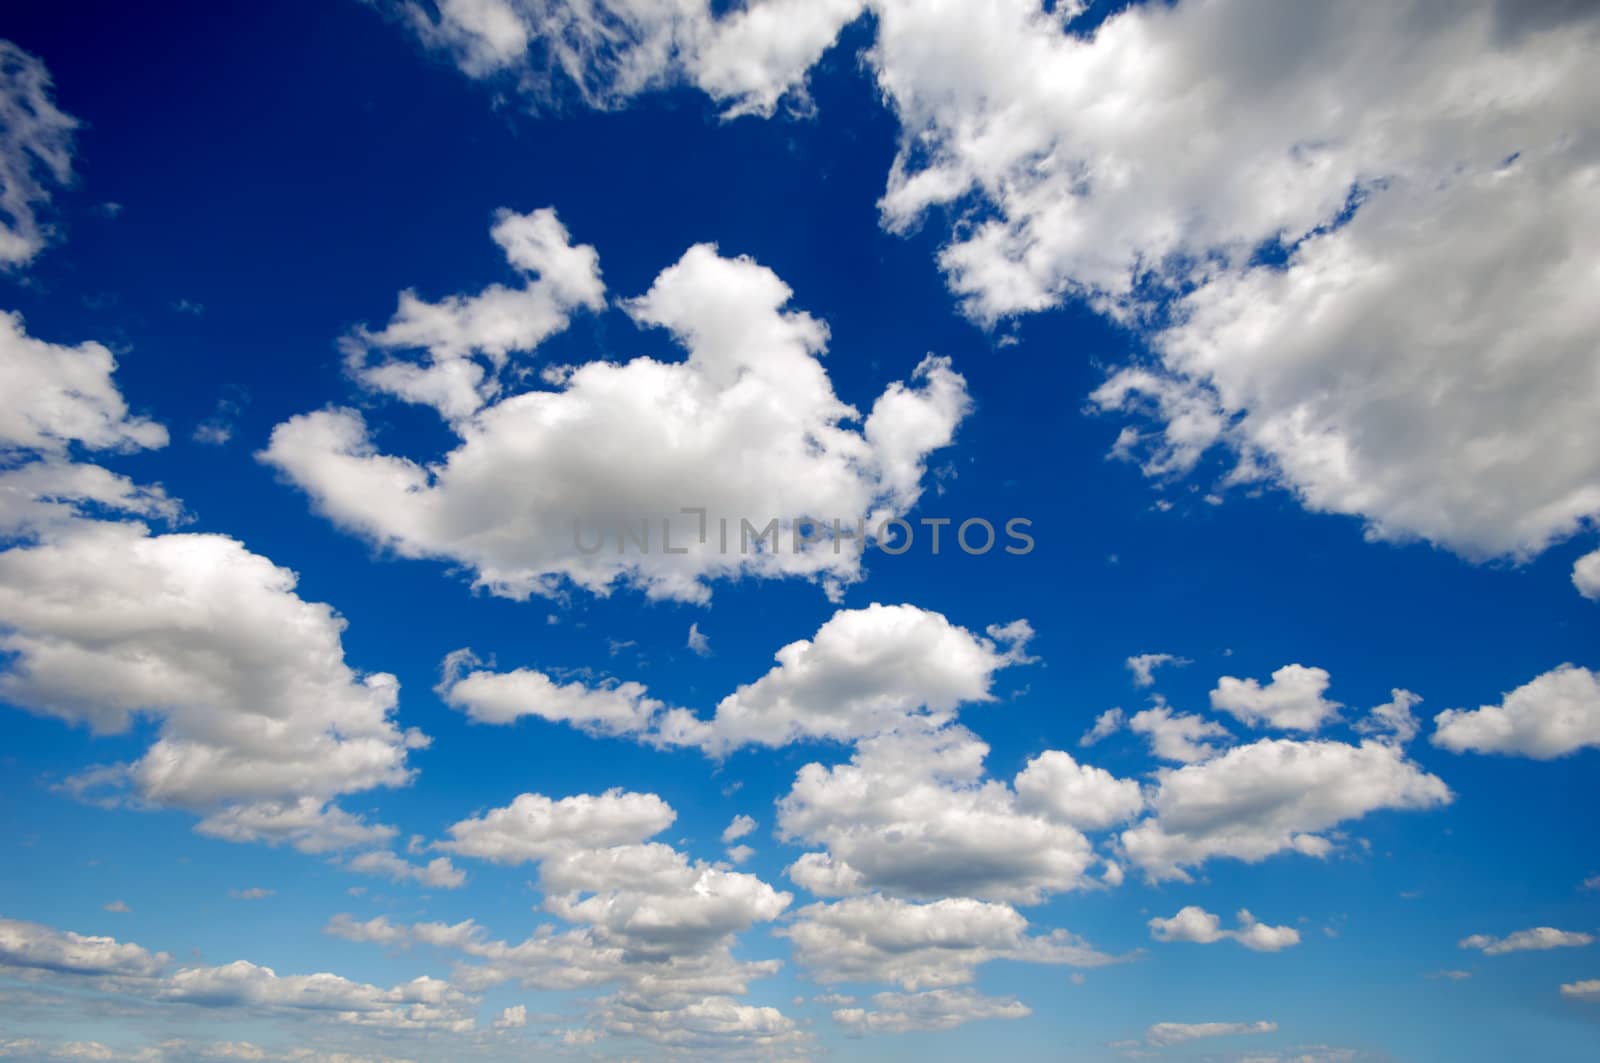 Cloudscape with cumulus clouds and blue sky